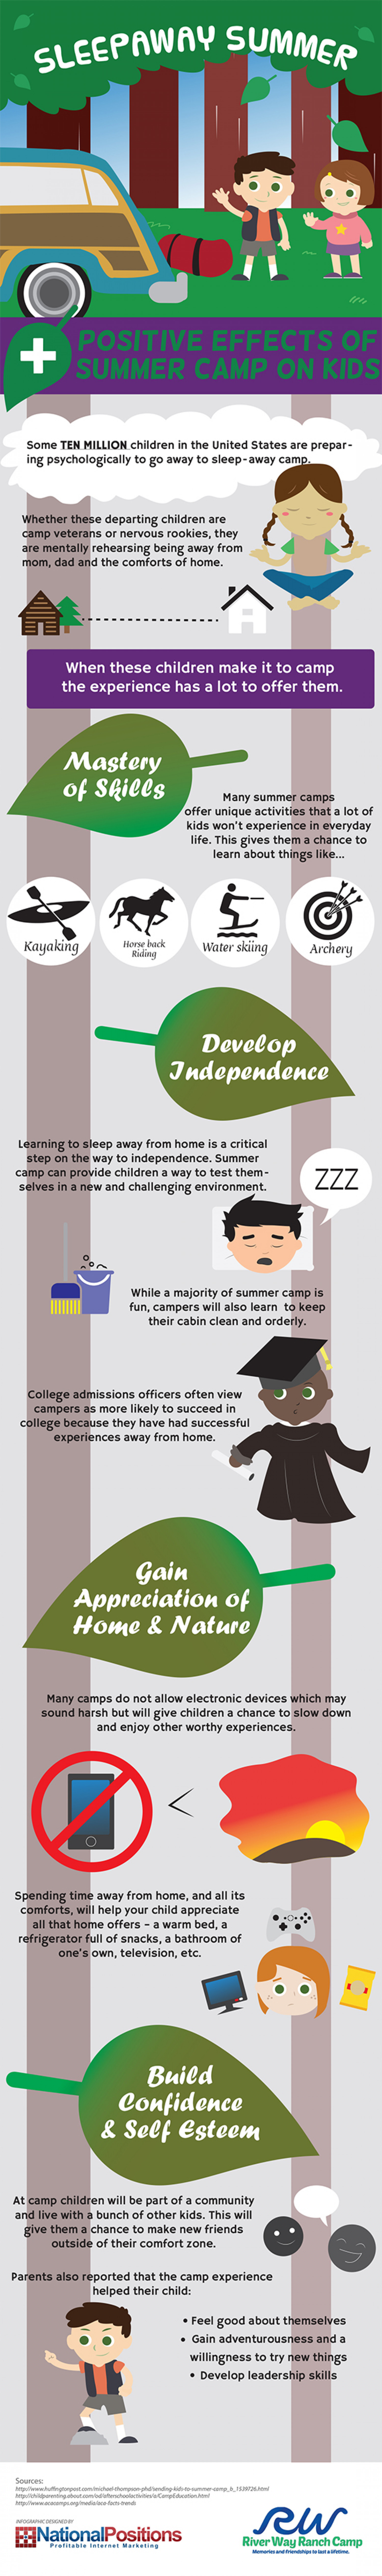 Sleepaway Summer: Positive Effects of Summer Camp on Kids Infographic